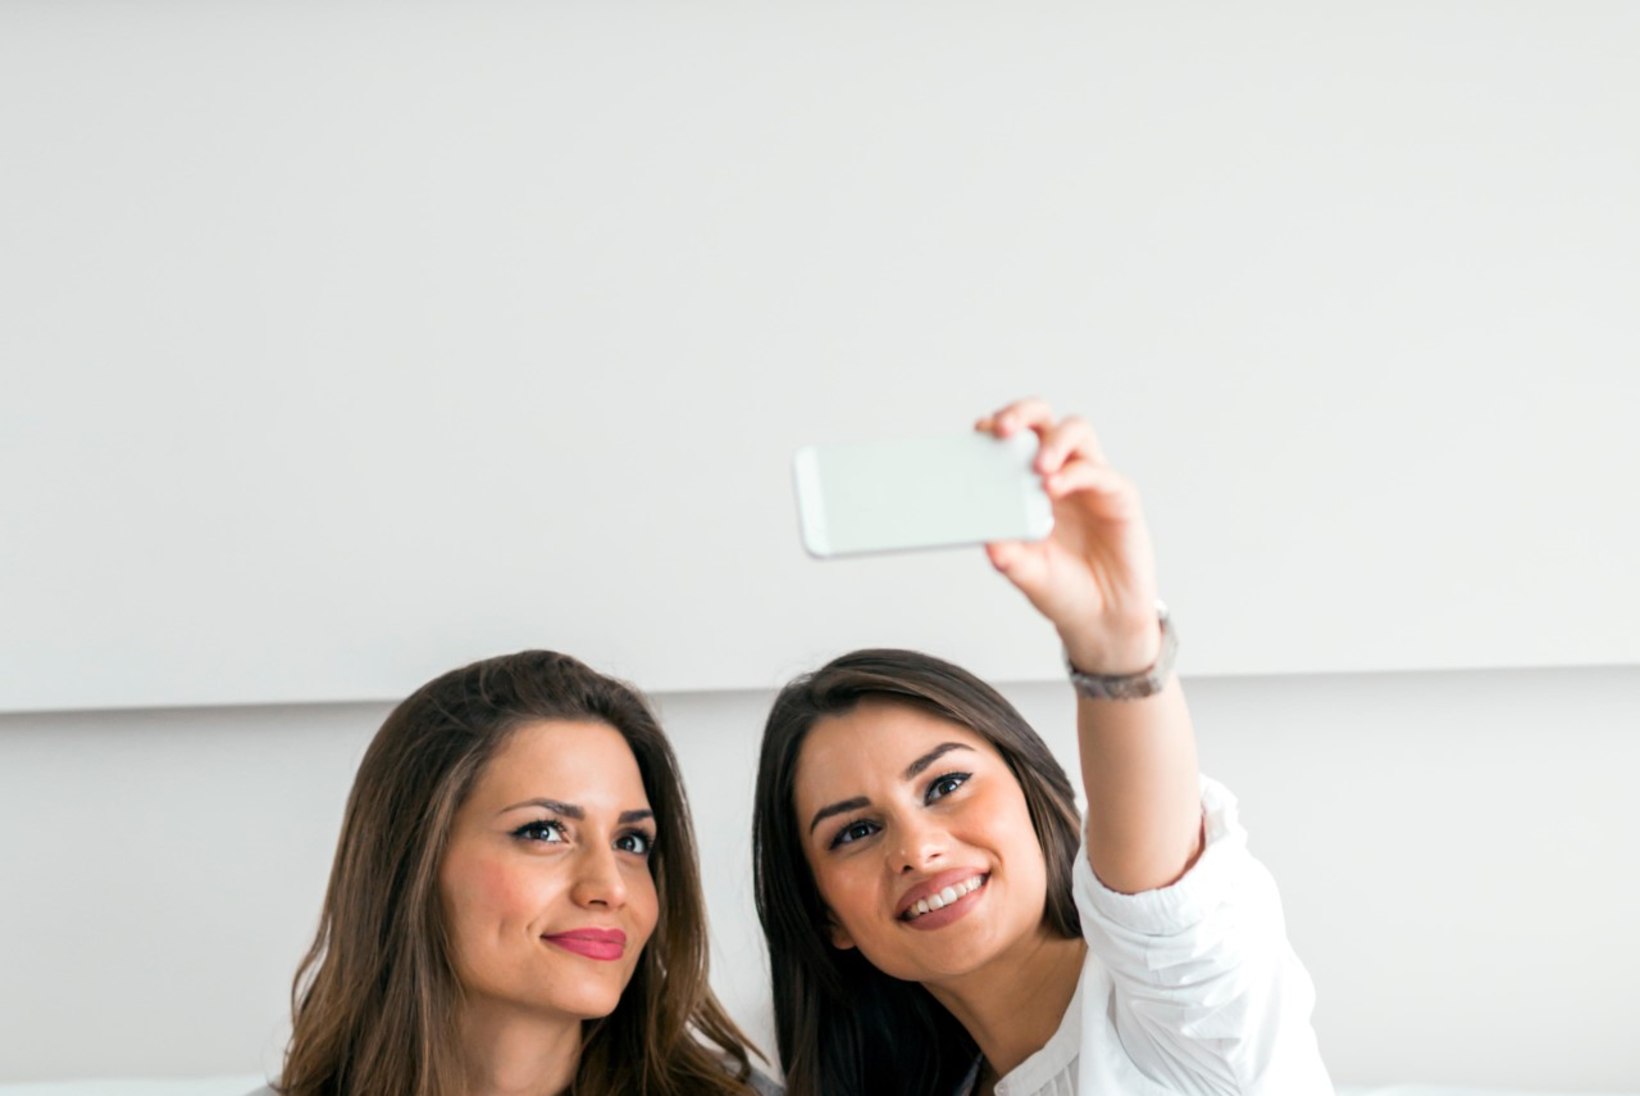 MUSTA PESU VASTU: seksika selfie esimene reegel - korista tuba ära!